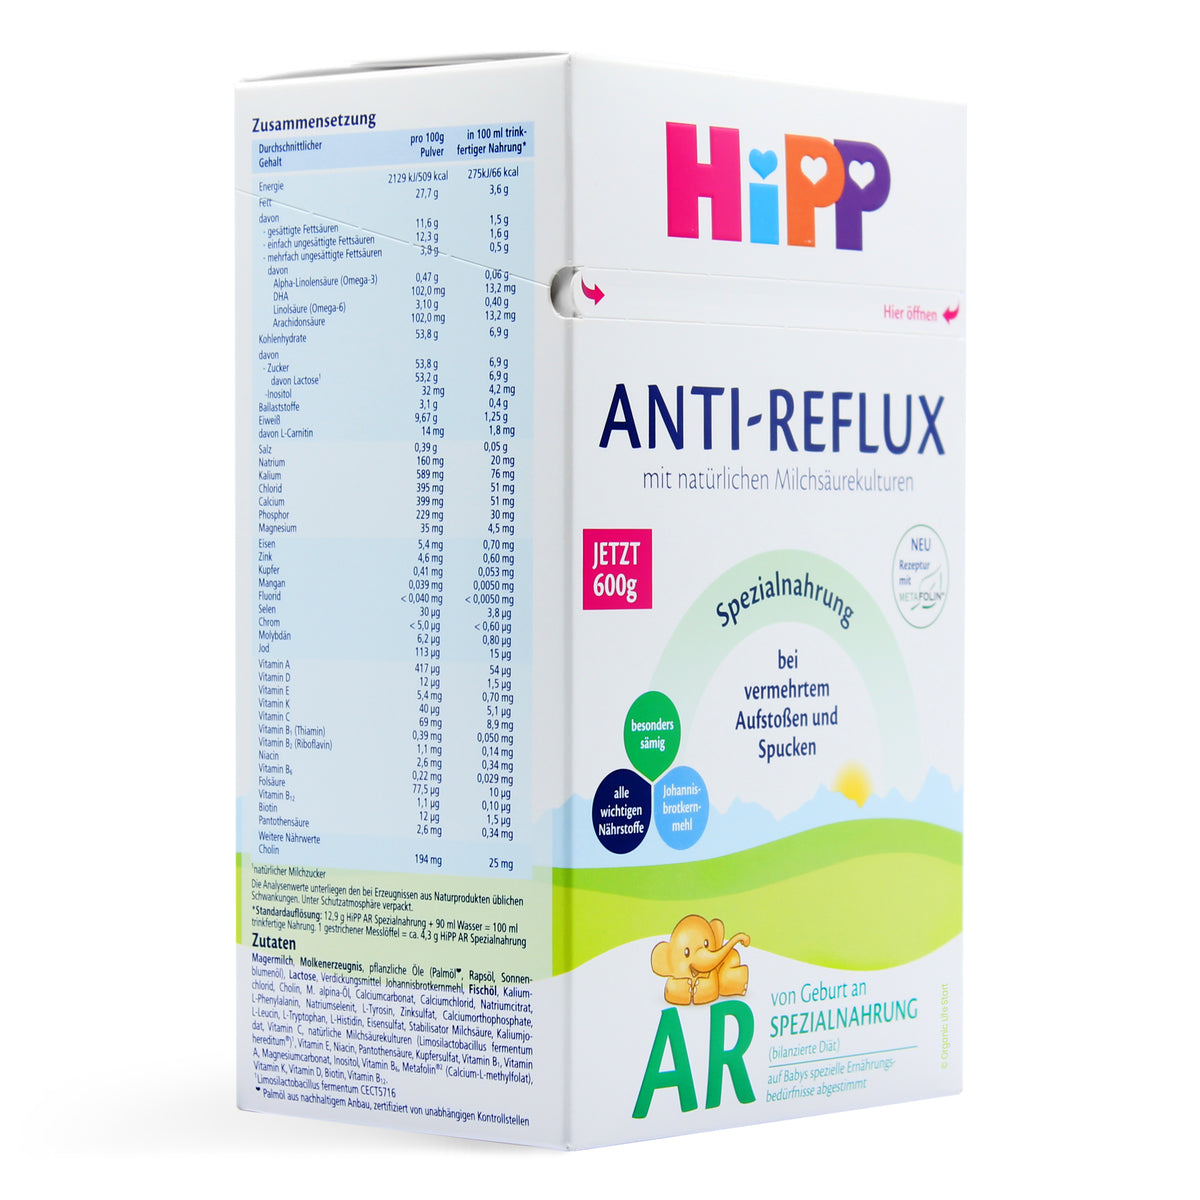 HiPP AR Germany Anti-Reflux Milk Formula